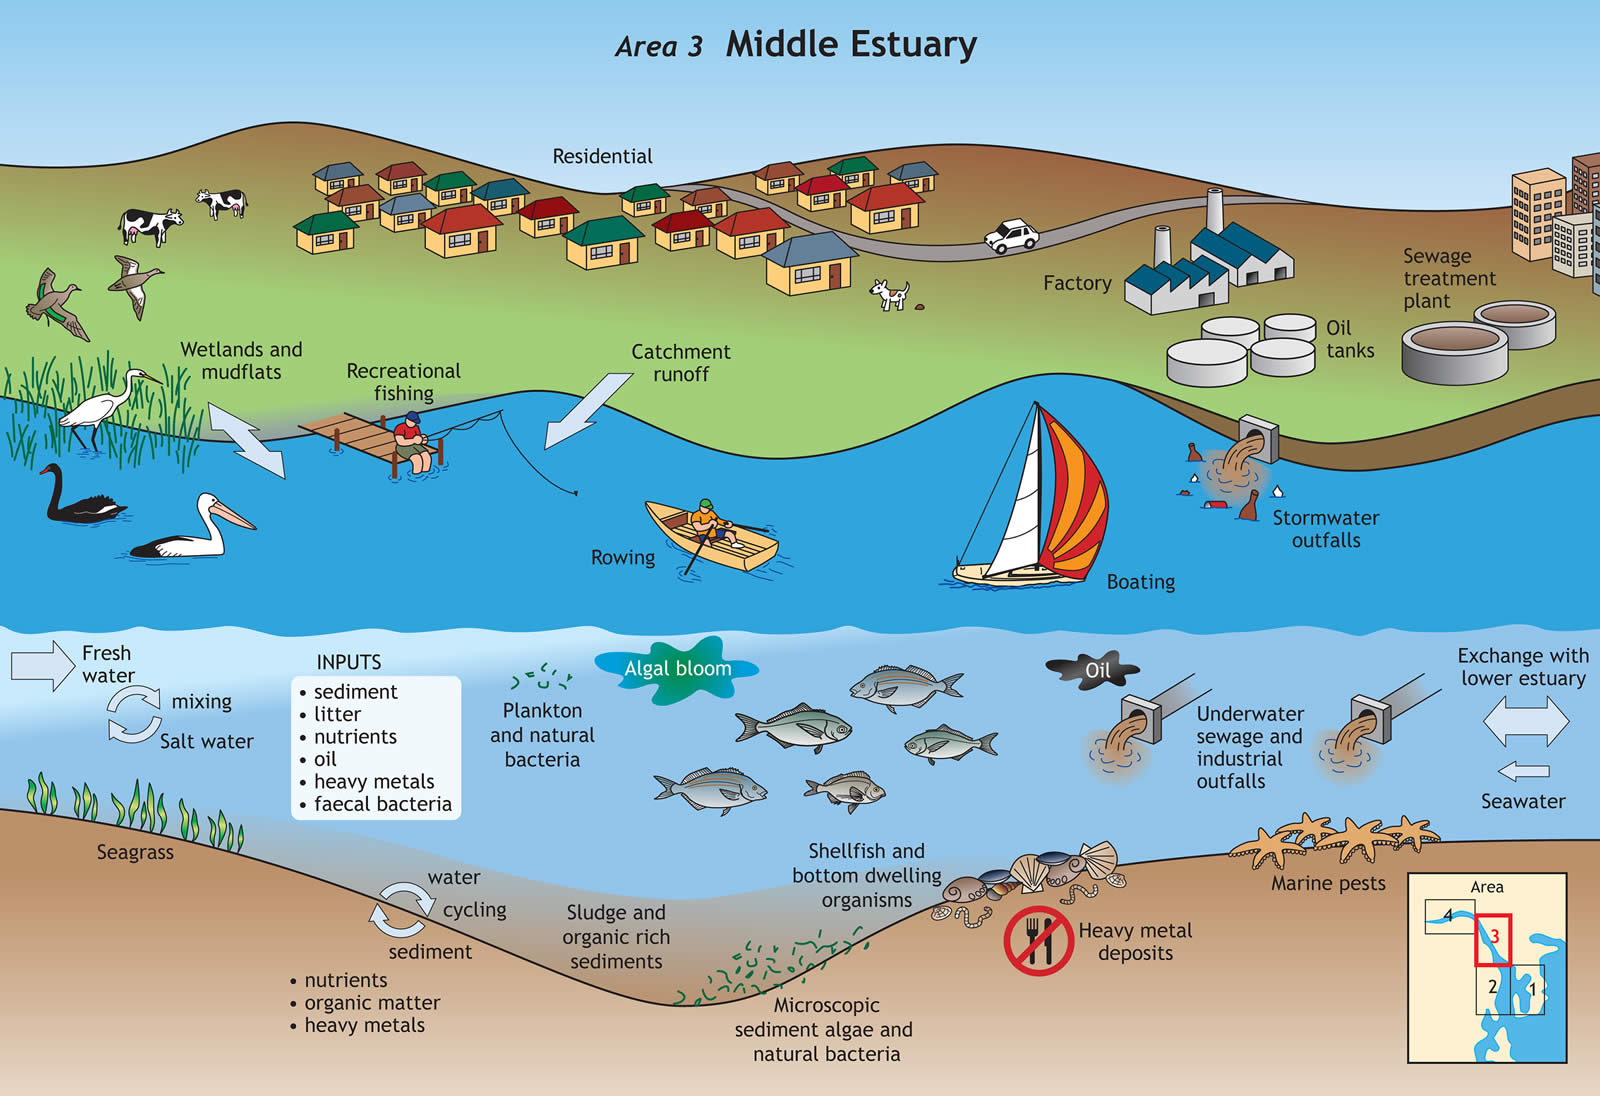 Middle estuary. Diagrams produced by Land Tasmania © State of Tasmania.